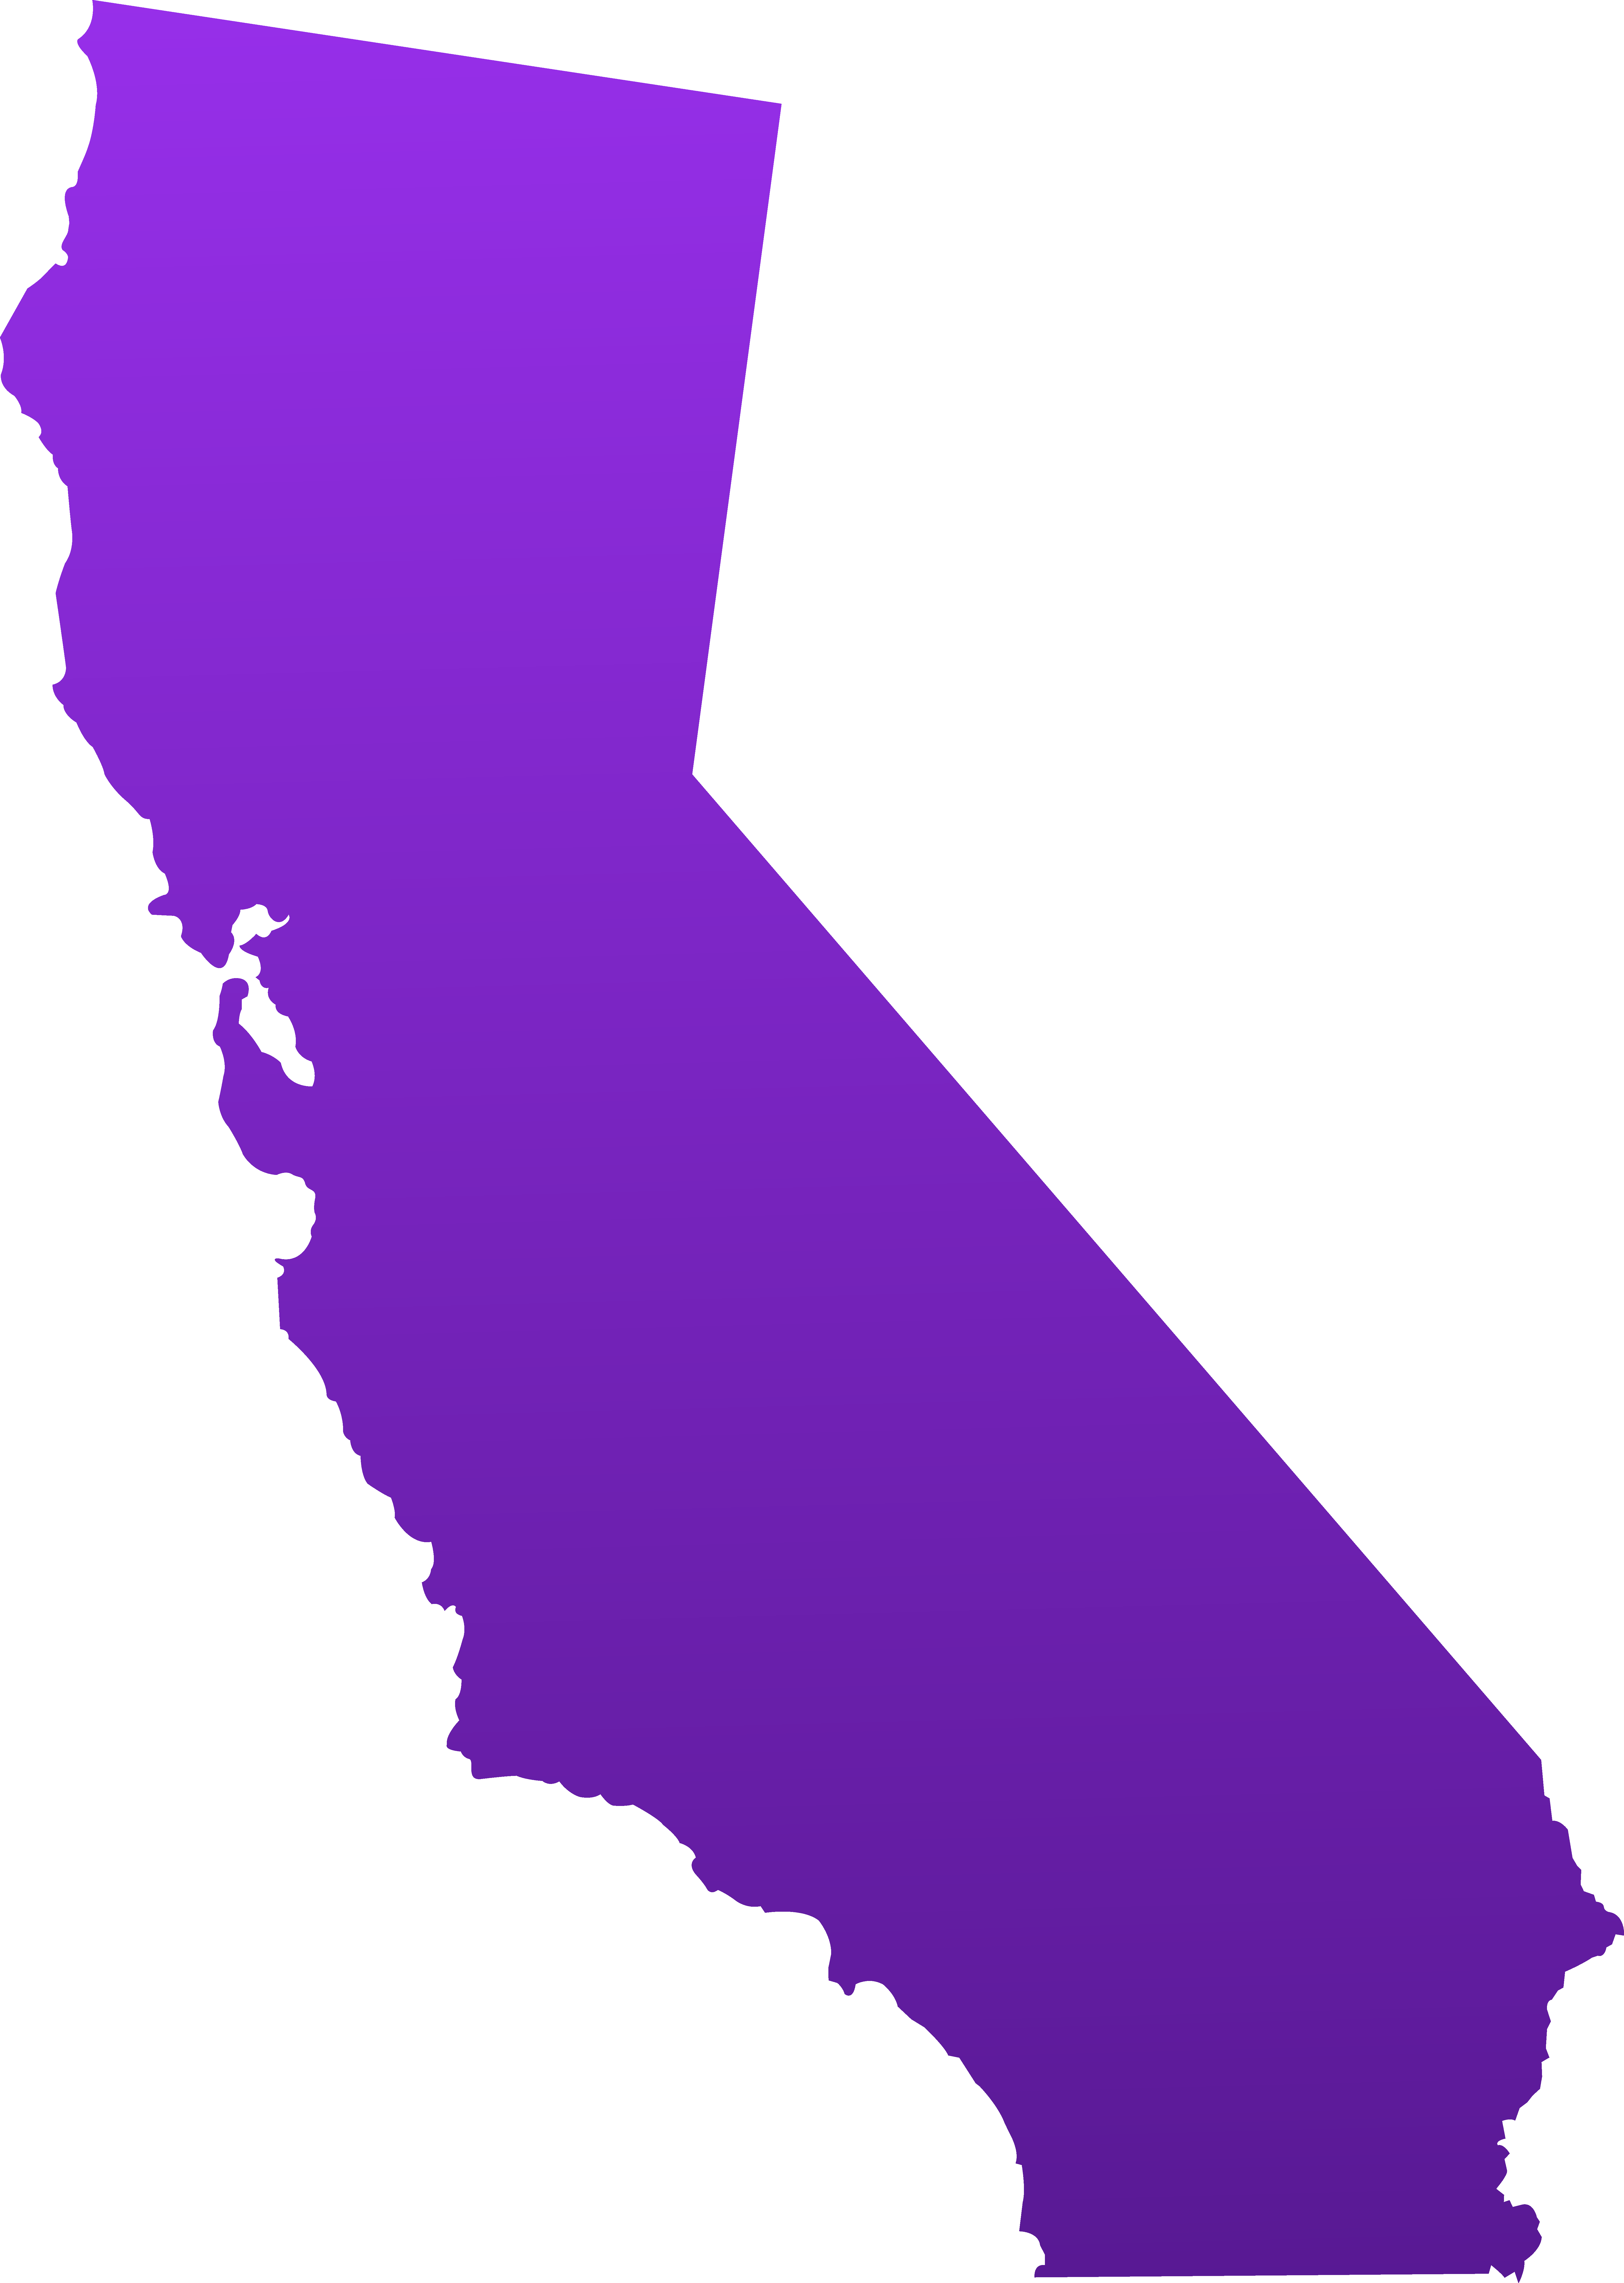 California State Design - Free Clip Art